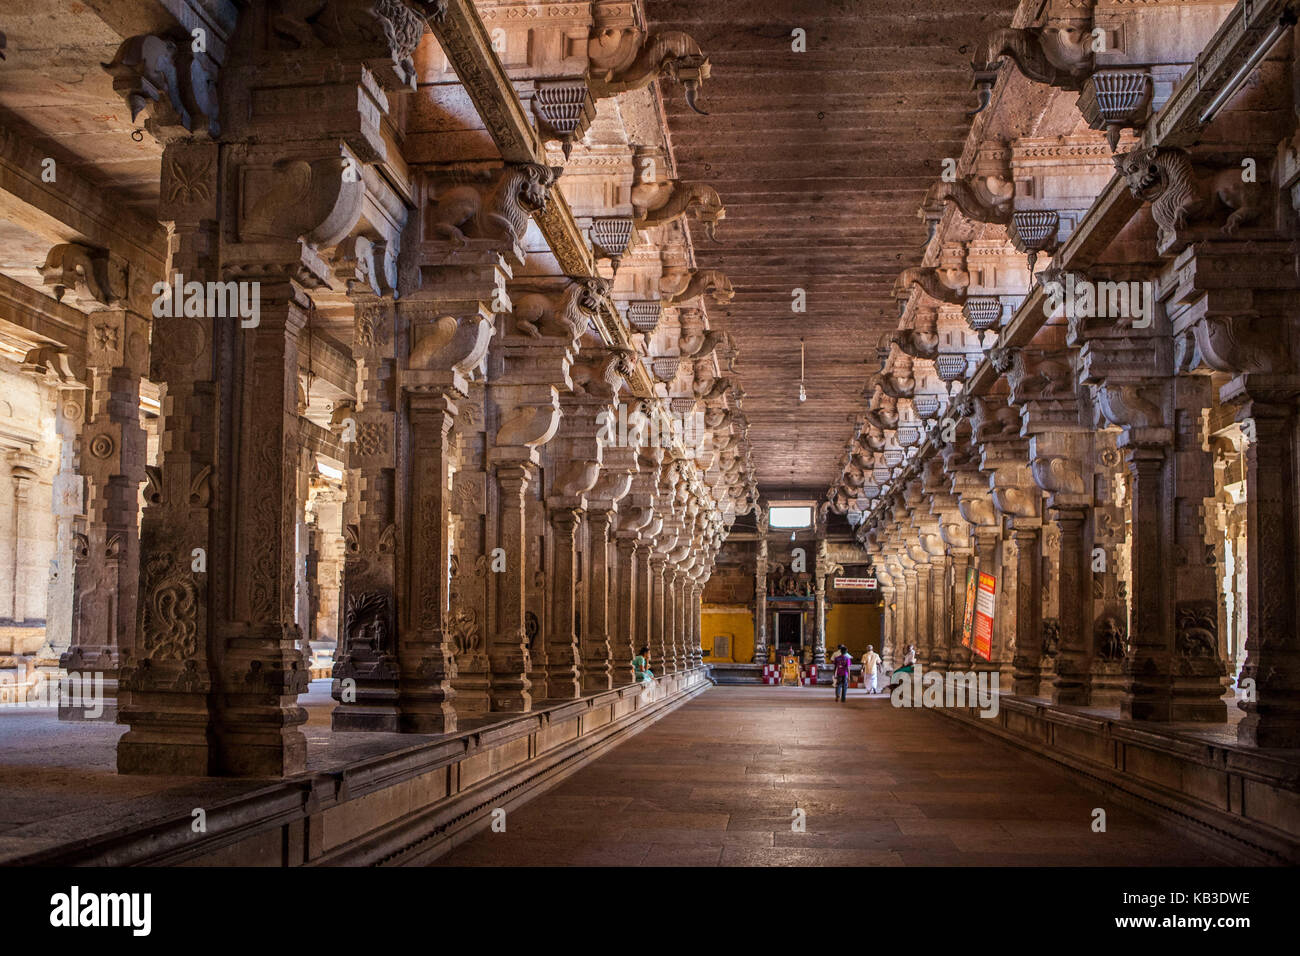 India, Tamil Nadu, Tiruchirappali, Jambukeshwara temple, Shiva temple, interior view Stock Photo